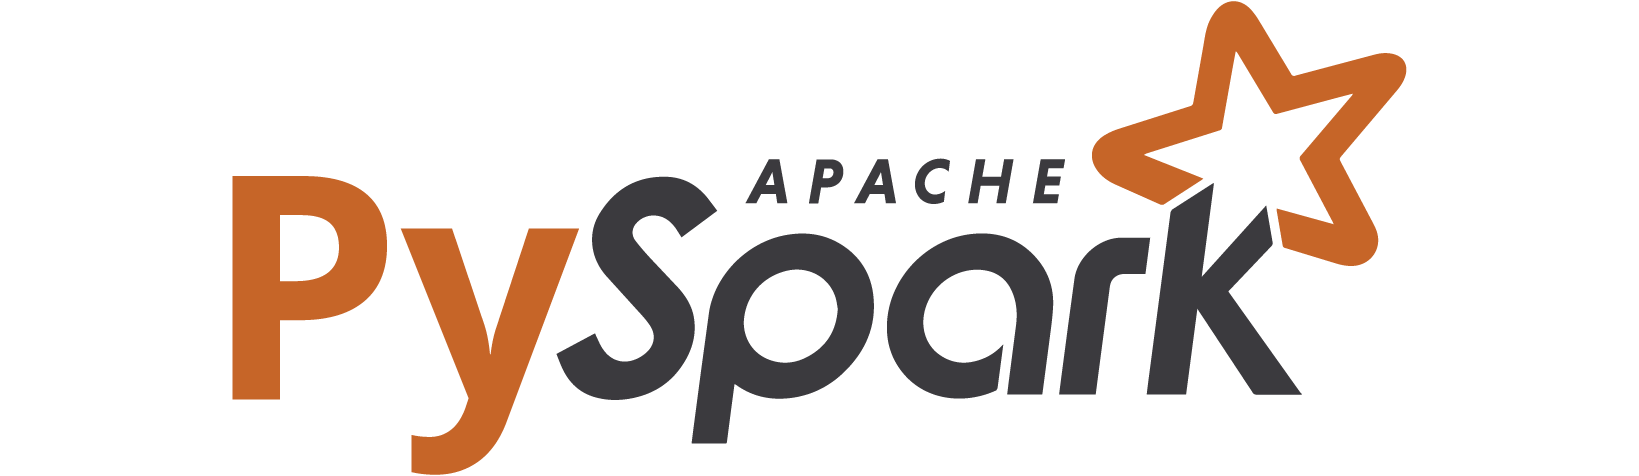 Apache PySpark_logo